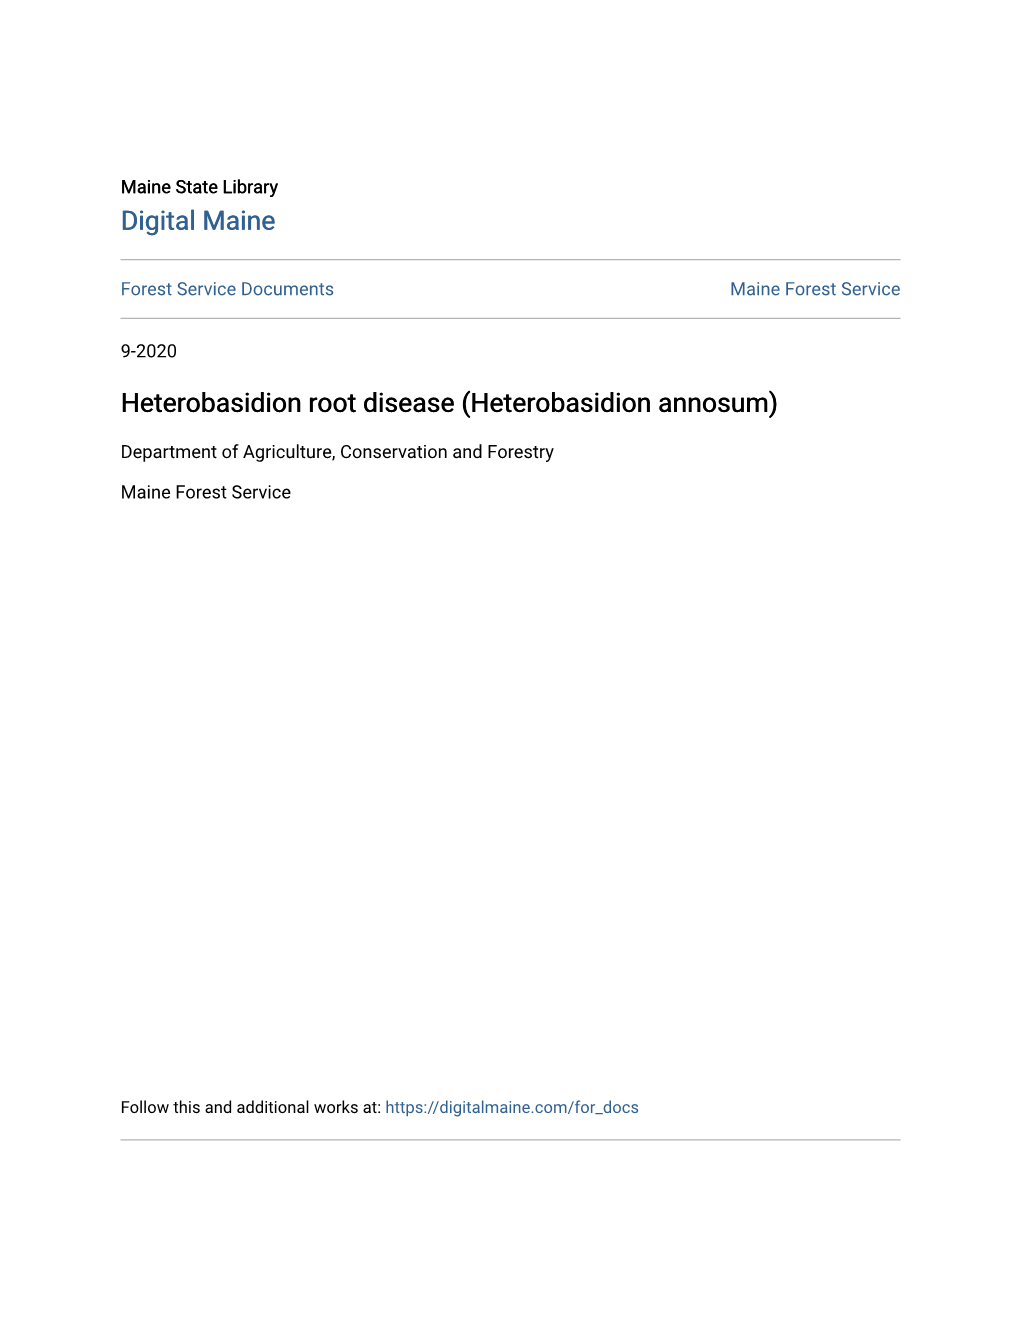 Heterobasidion Root Disease (Heterobasidion Annosum)